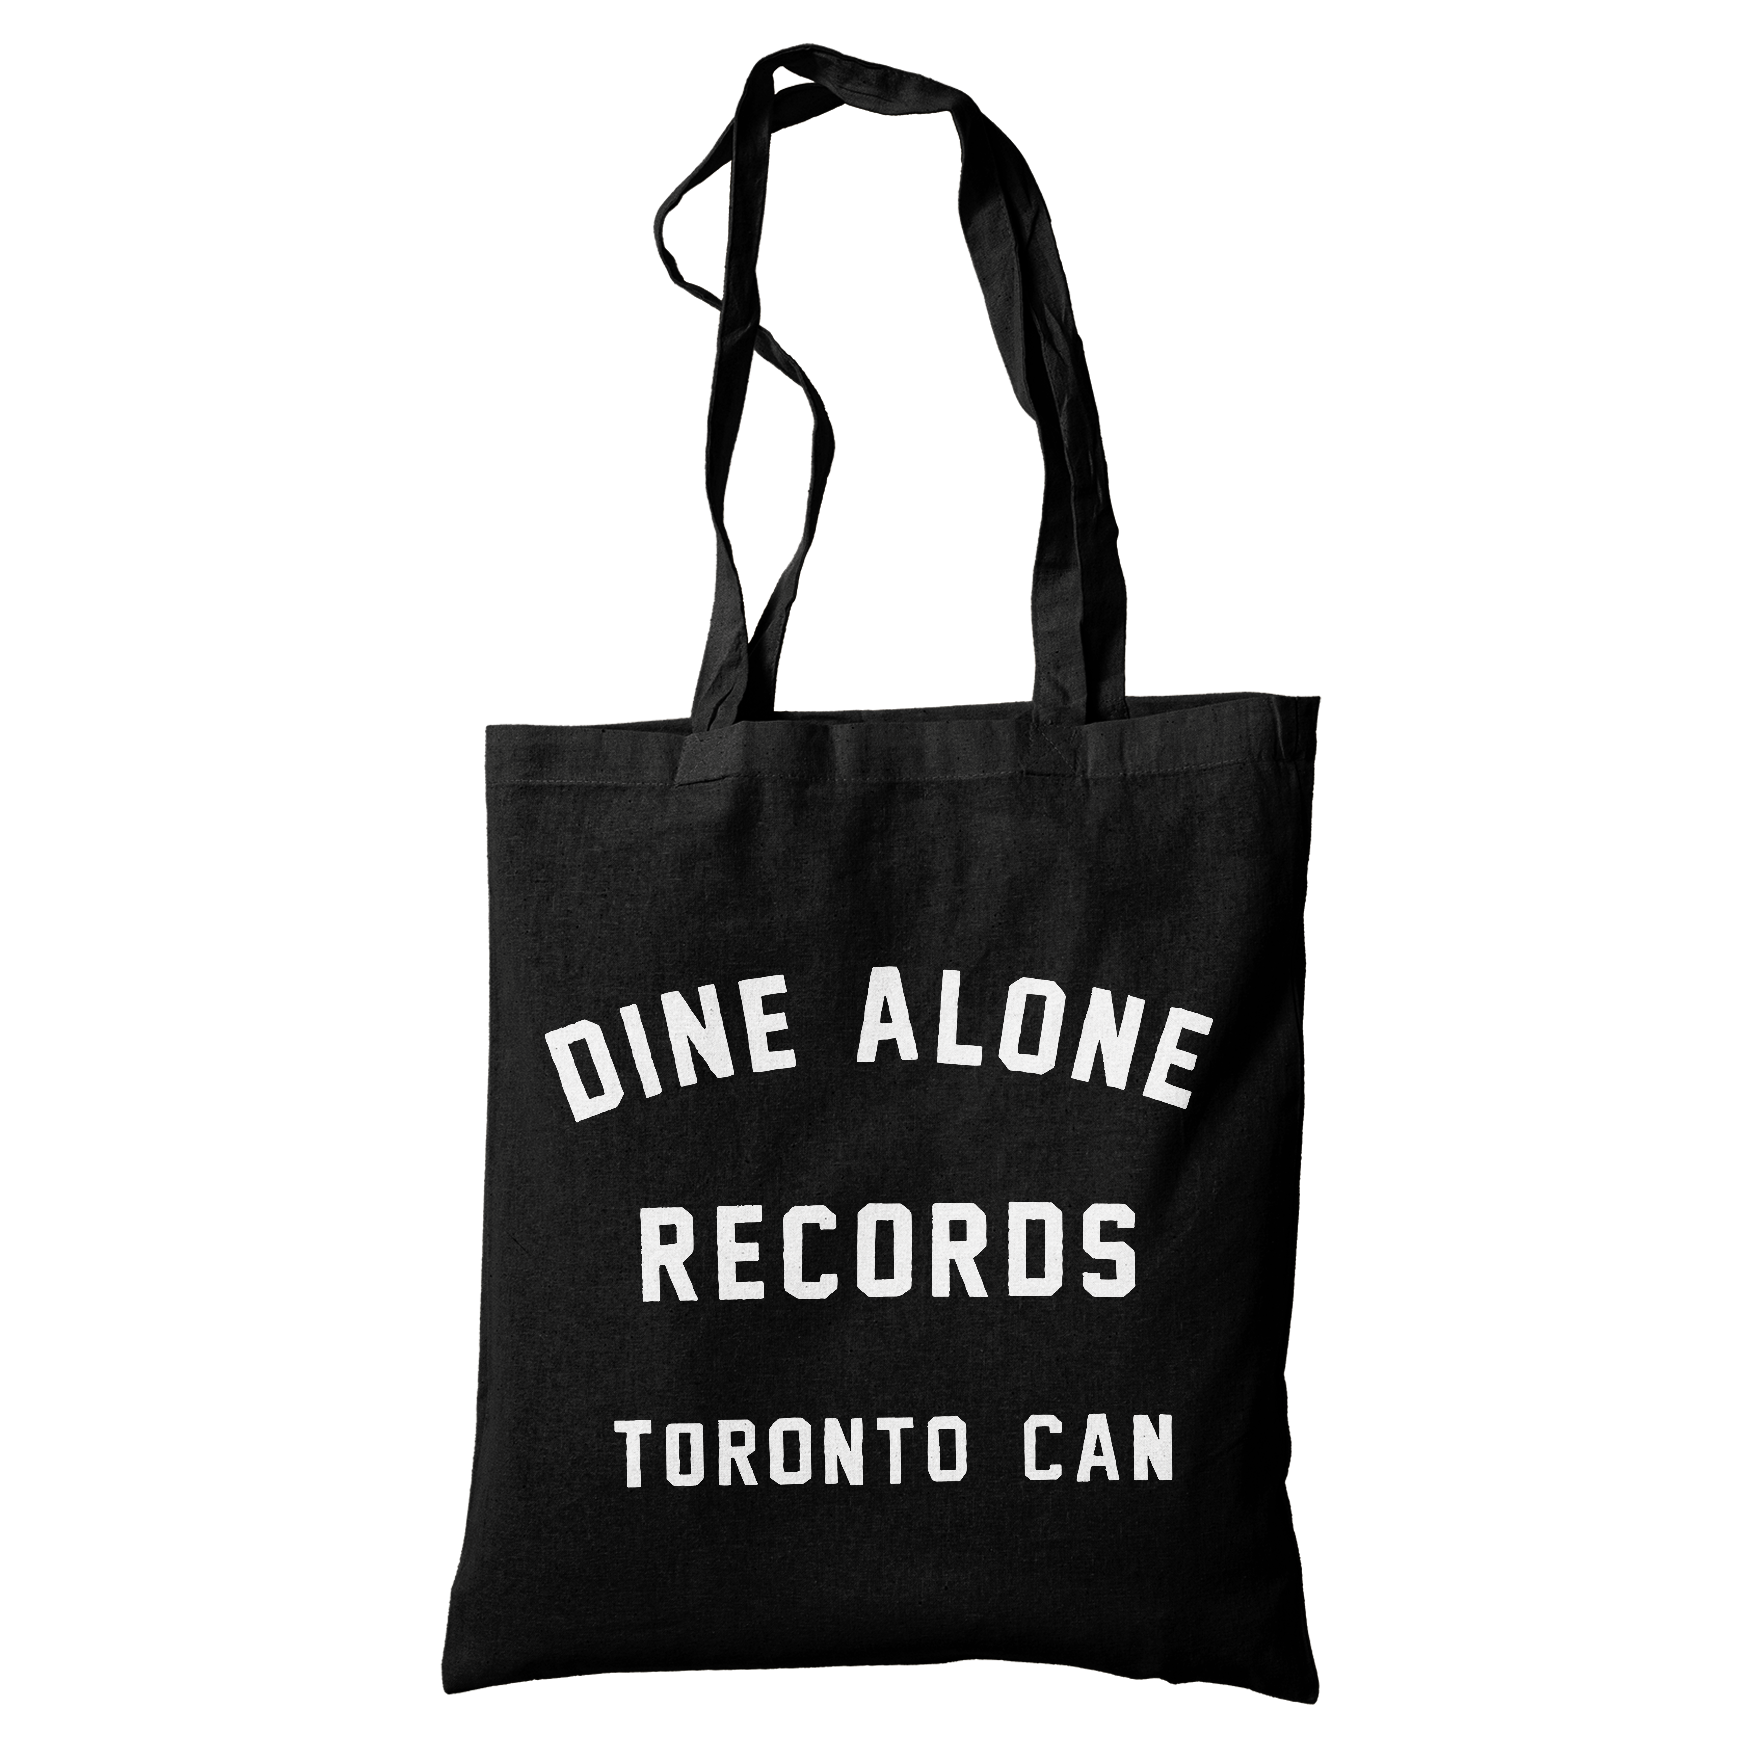 Toronto Tote Bag